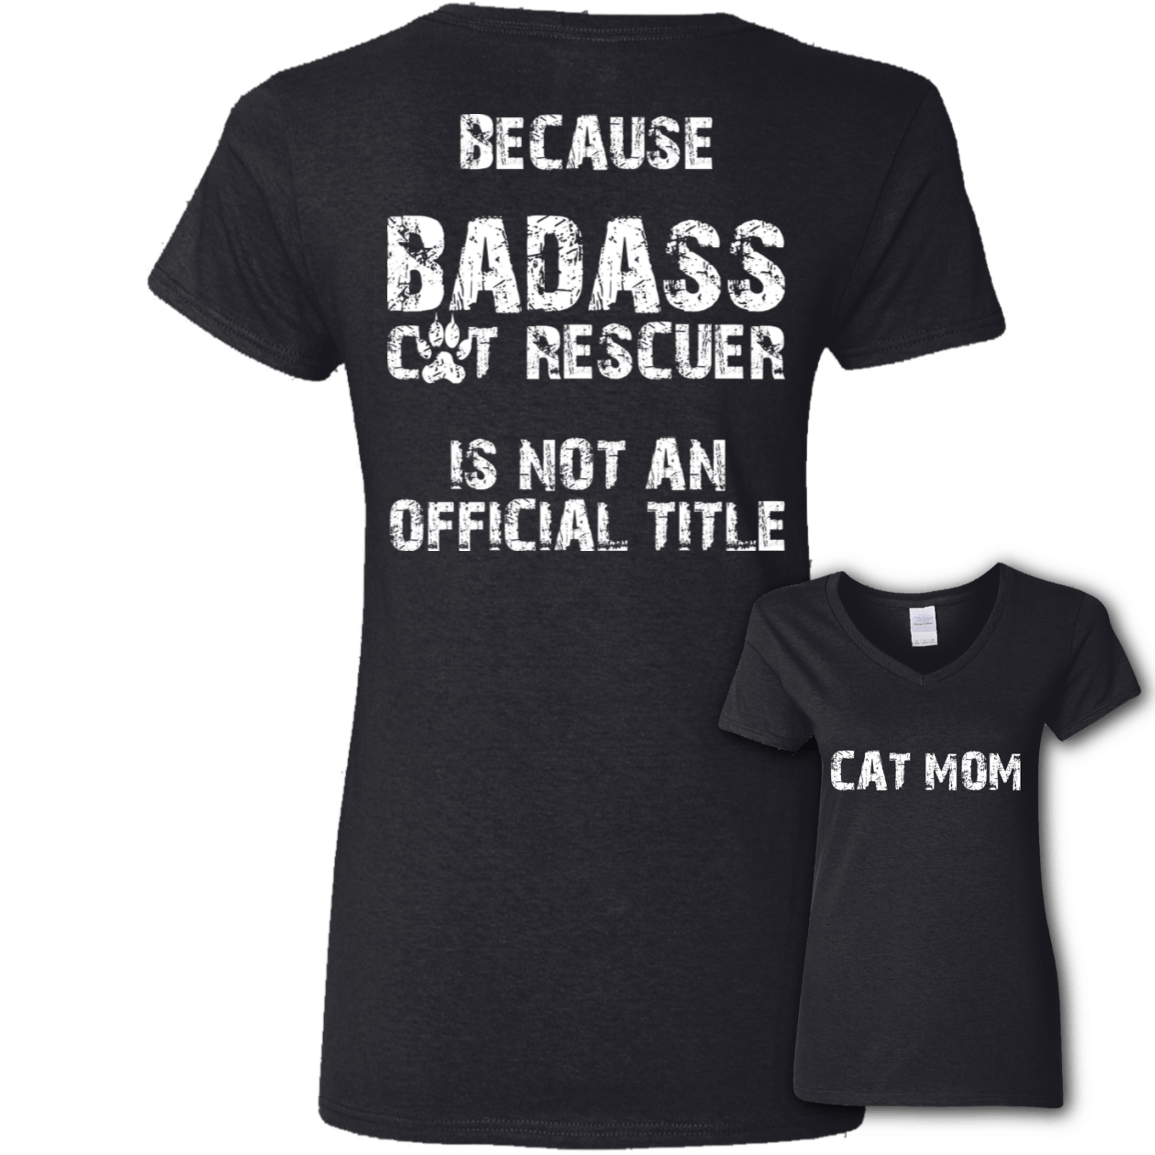 Bad*ss Cat Rescuer - Ladies V Neck.